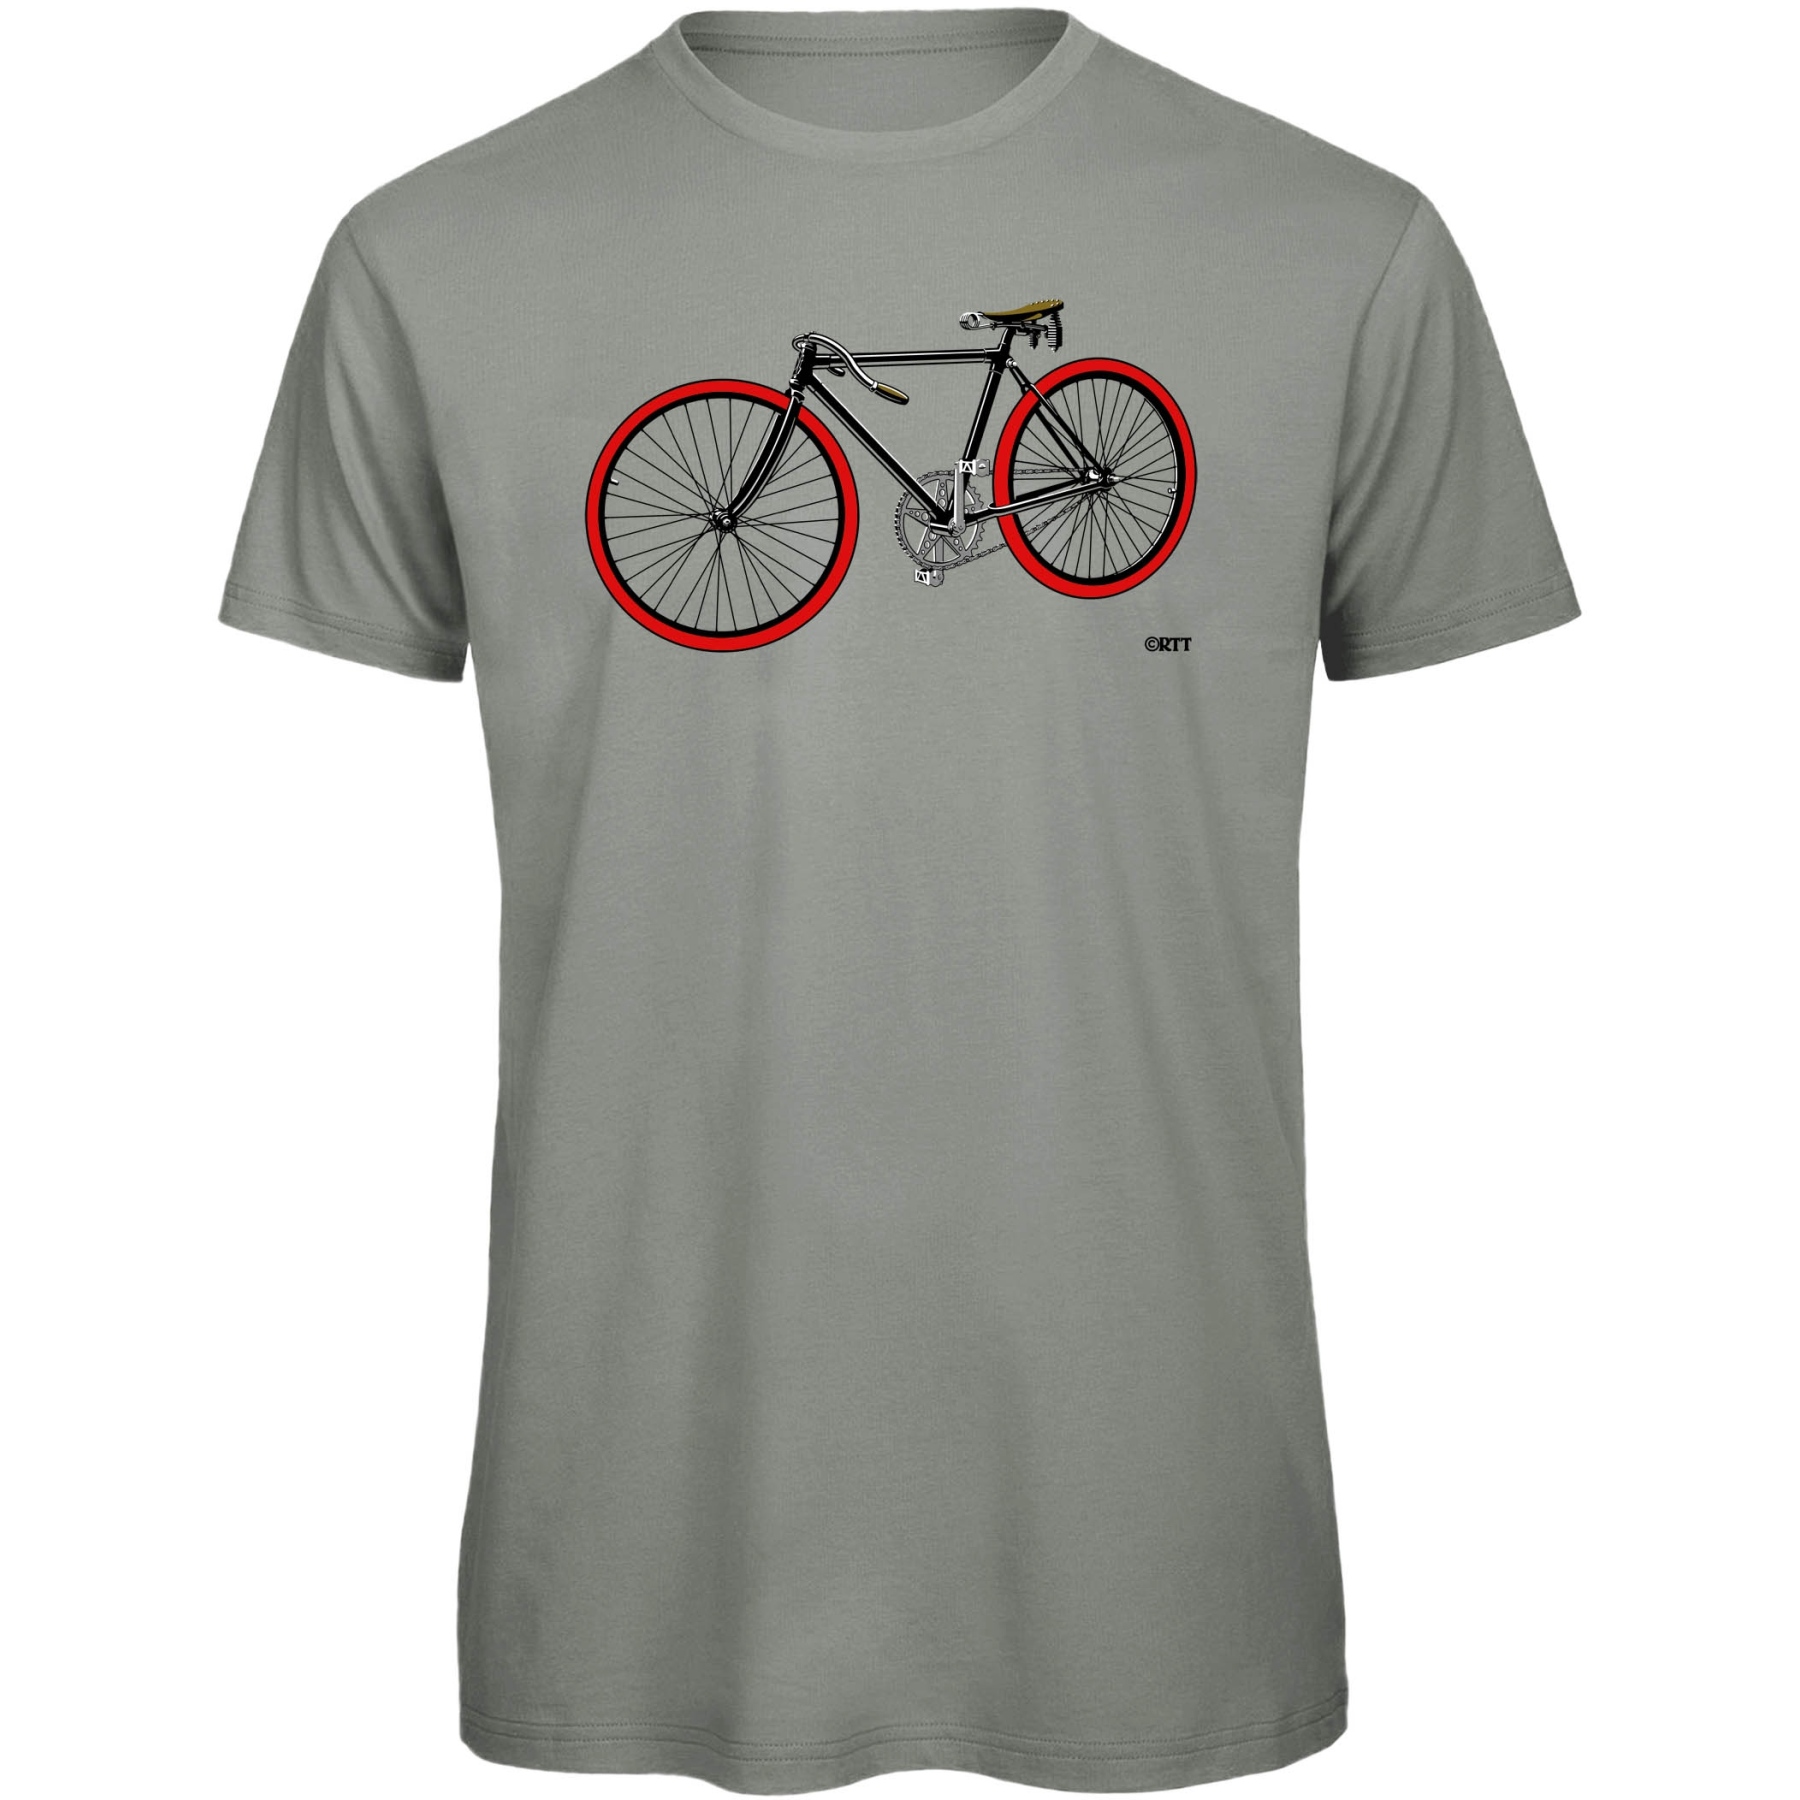 Productfoto van RTTshirts Fiets T-Shirt - Retro Racefiets - lichtgrijs-rood